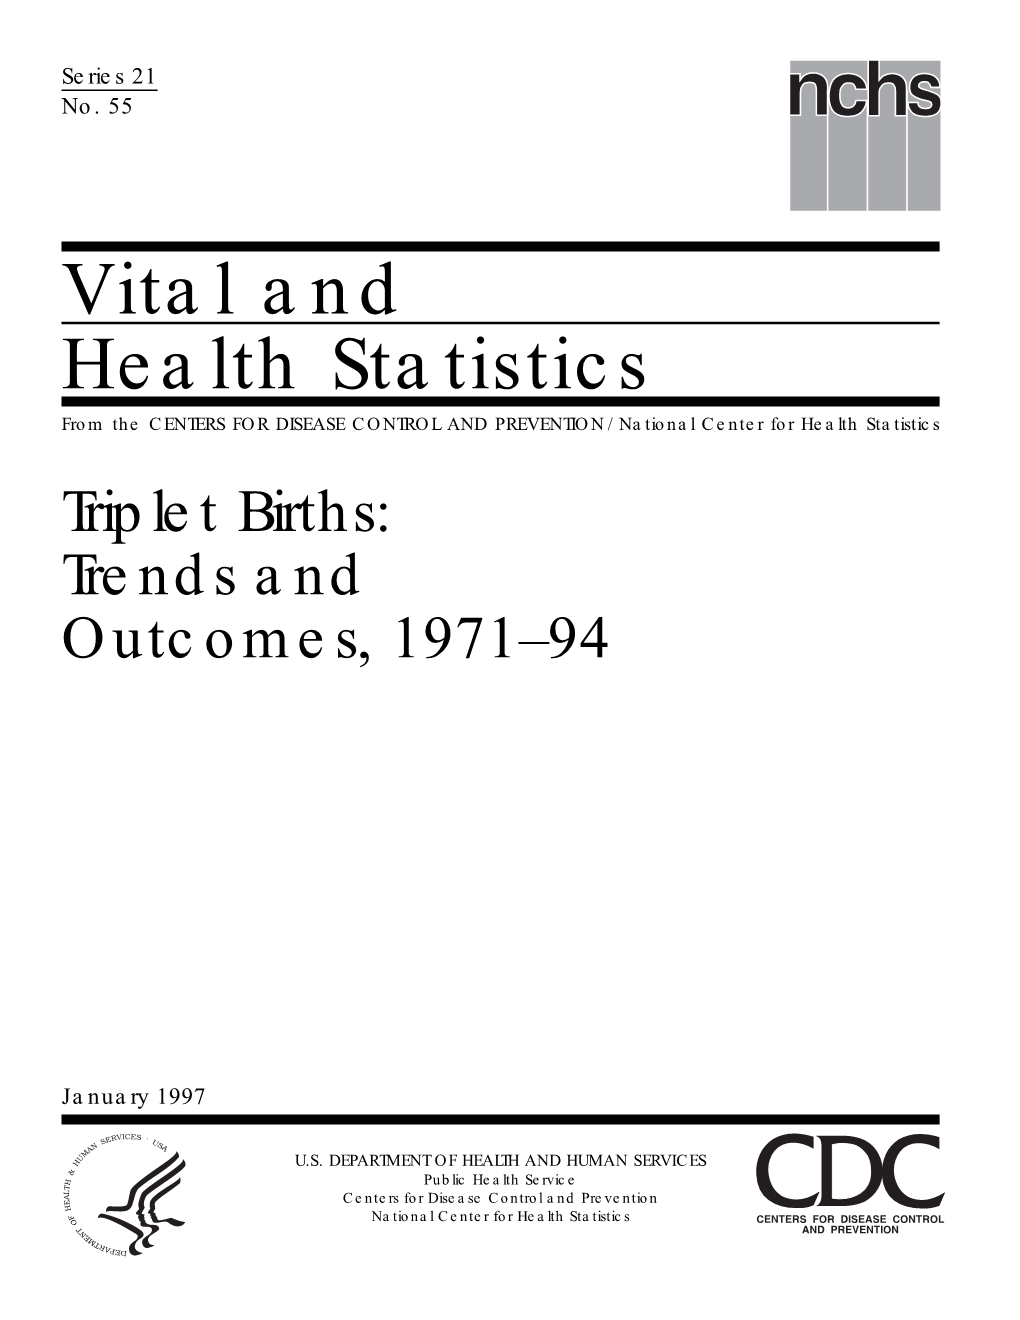 Vital and Health Statistics, Series 21, No 55